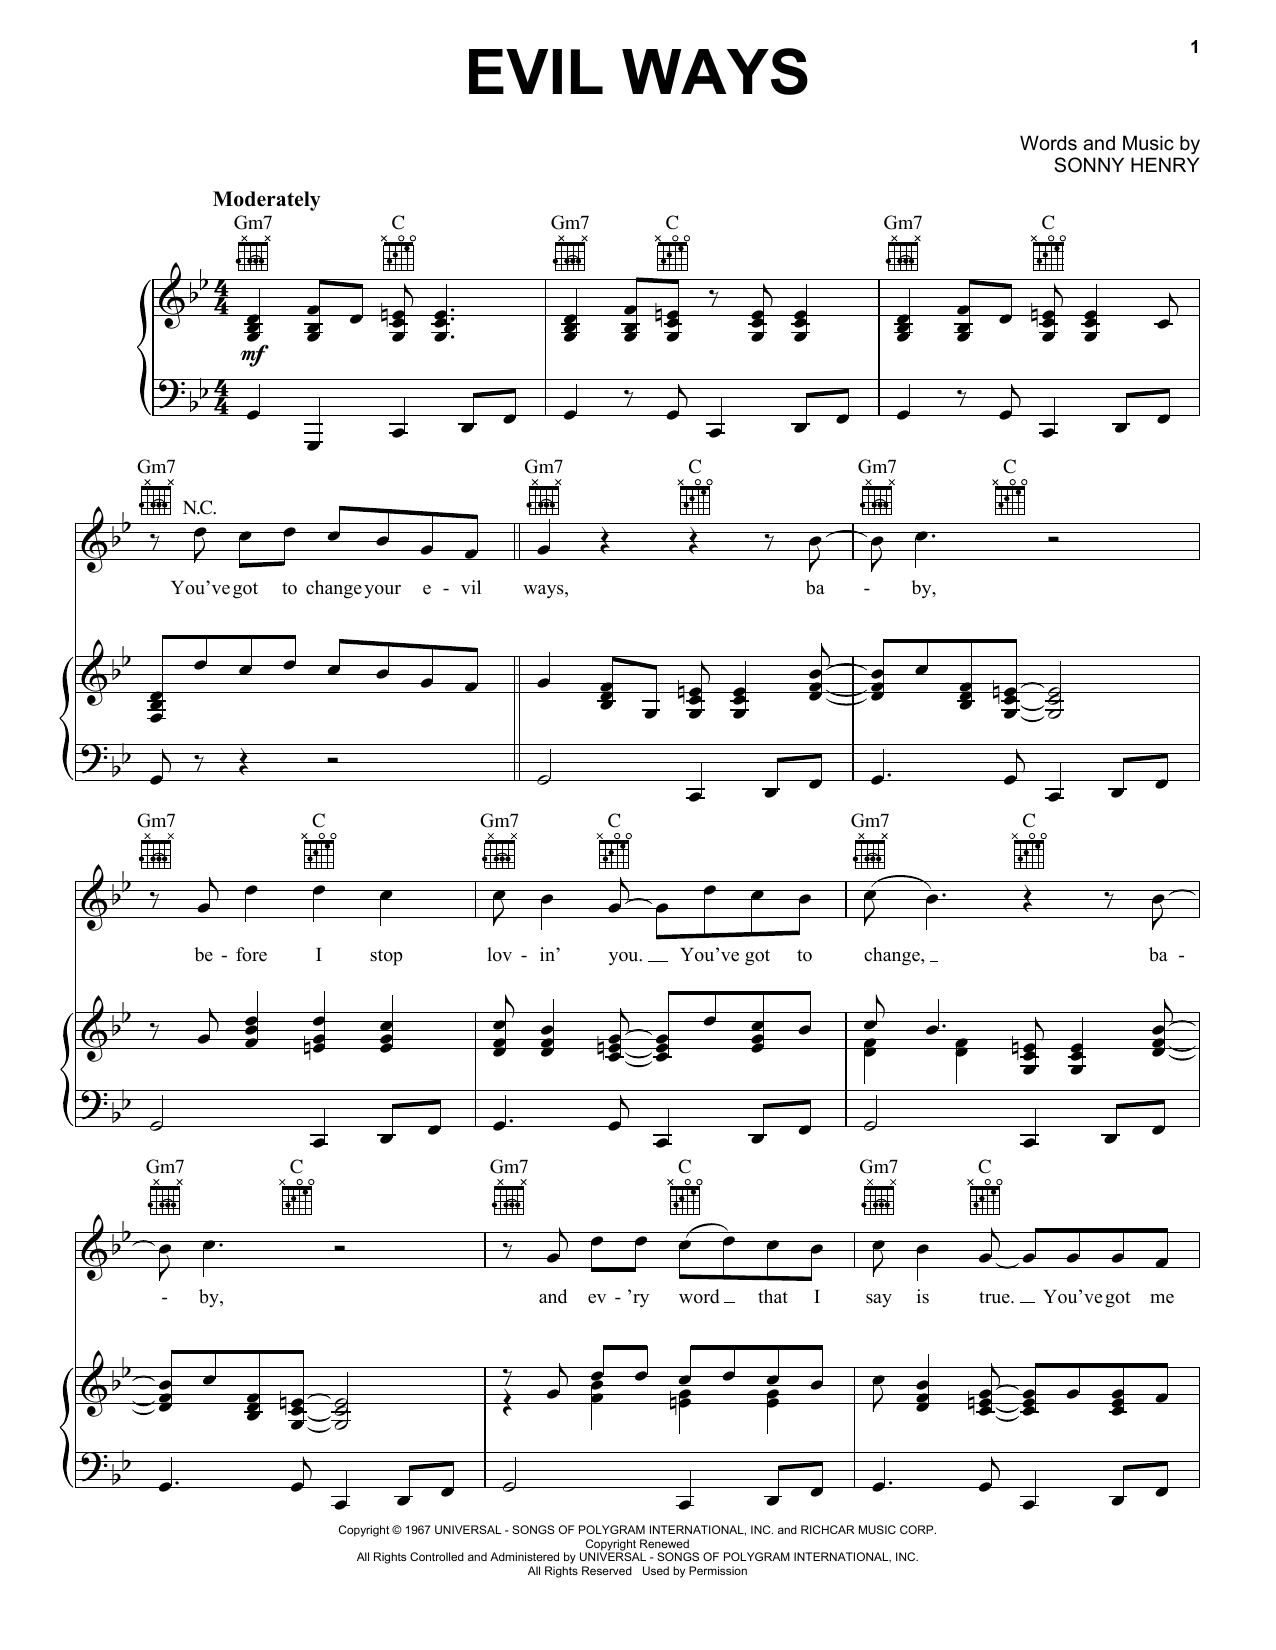 Santana Evil Ways Sheet Music Notes & Chords for Guitar Tab Play-Along - Download or Print PDF